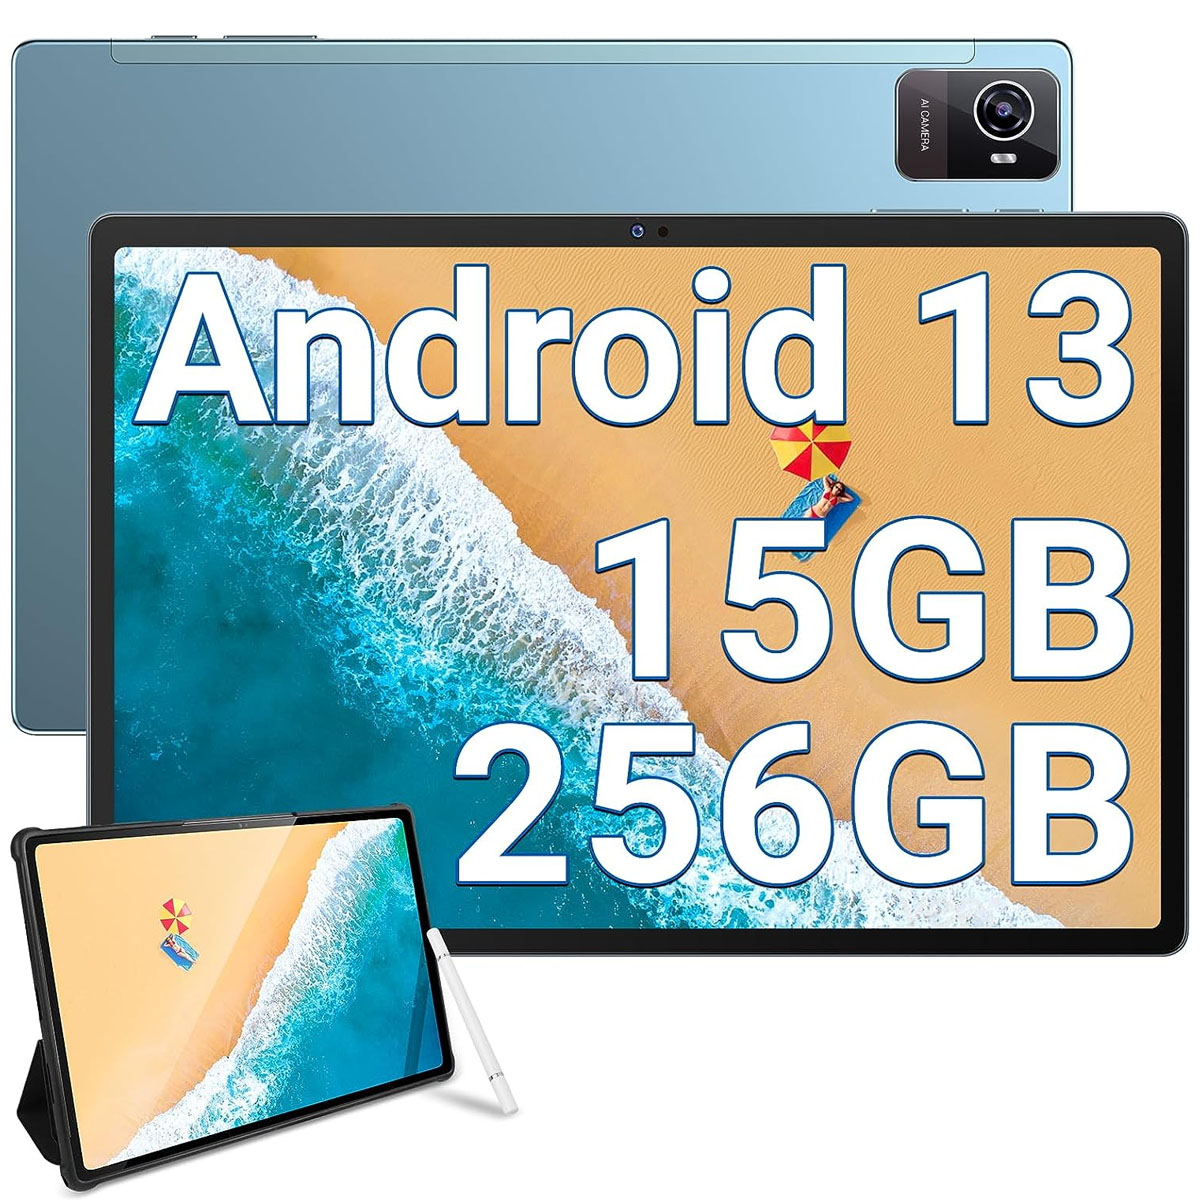 OUKITEL OKT3 15GB+256GB/2TB TF 4G, GB, 256 13 Blau 8250mAh Tablet, Android 10,5 Zoll